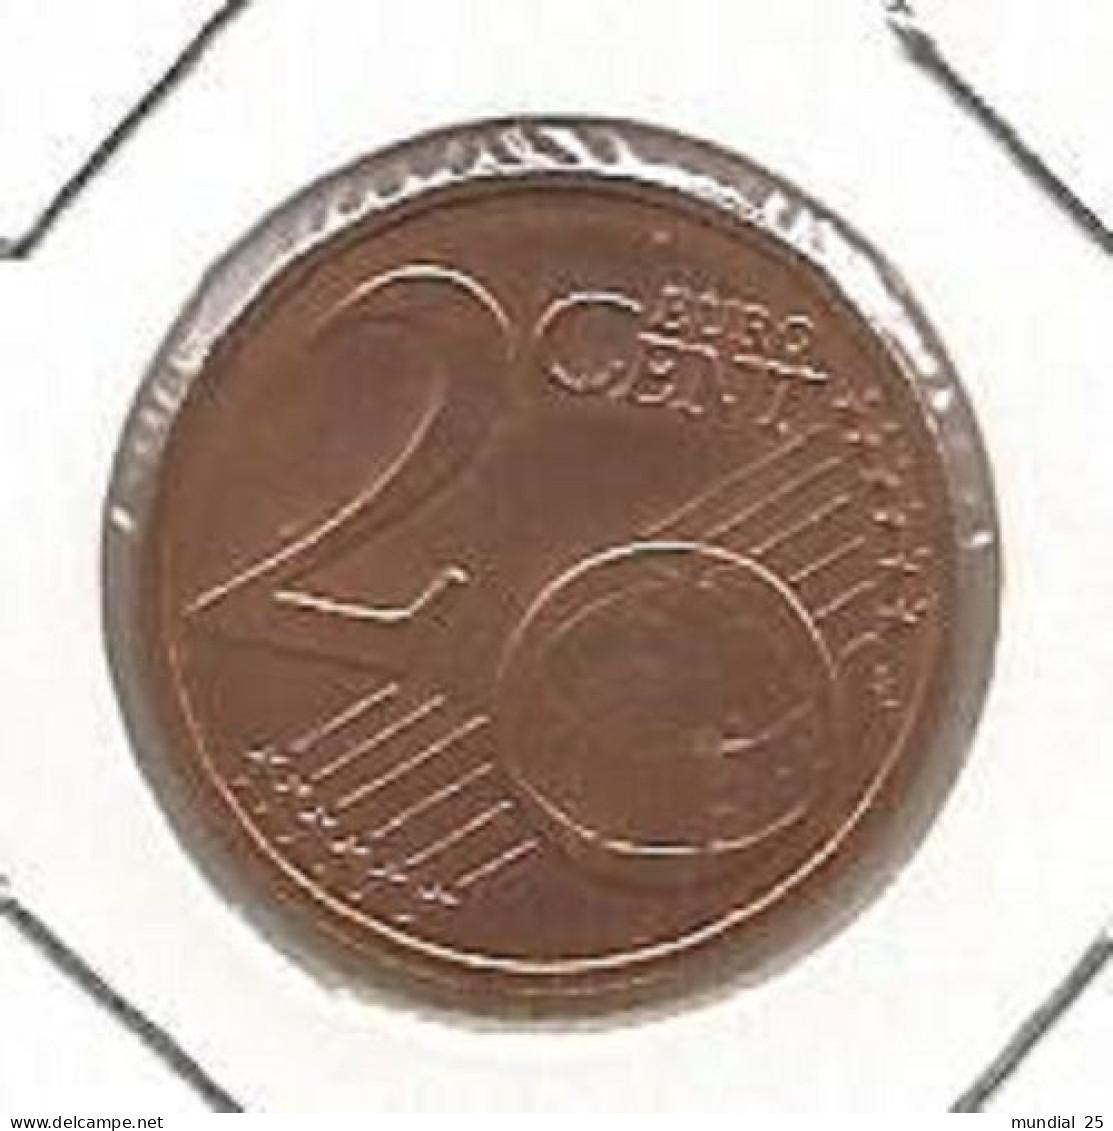 FRANCE 2 EURO CENT 1999 - France